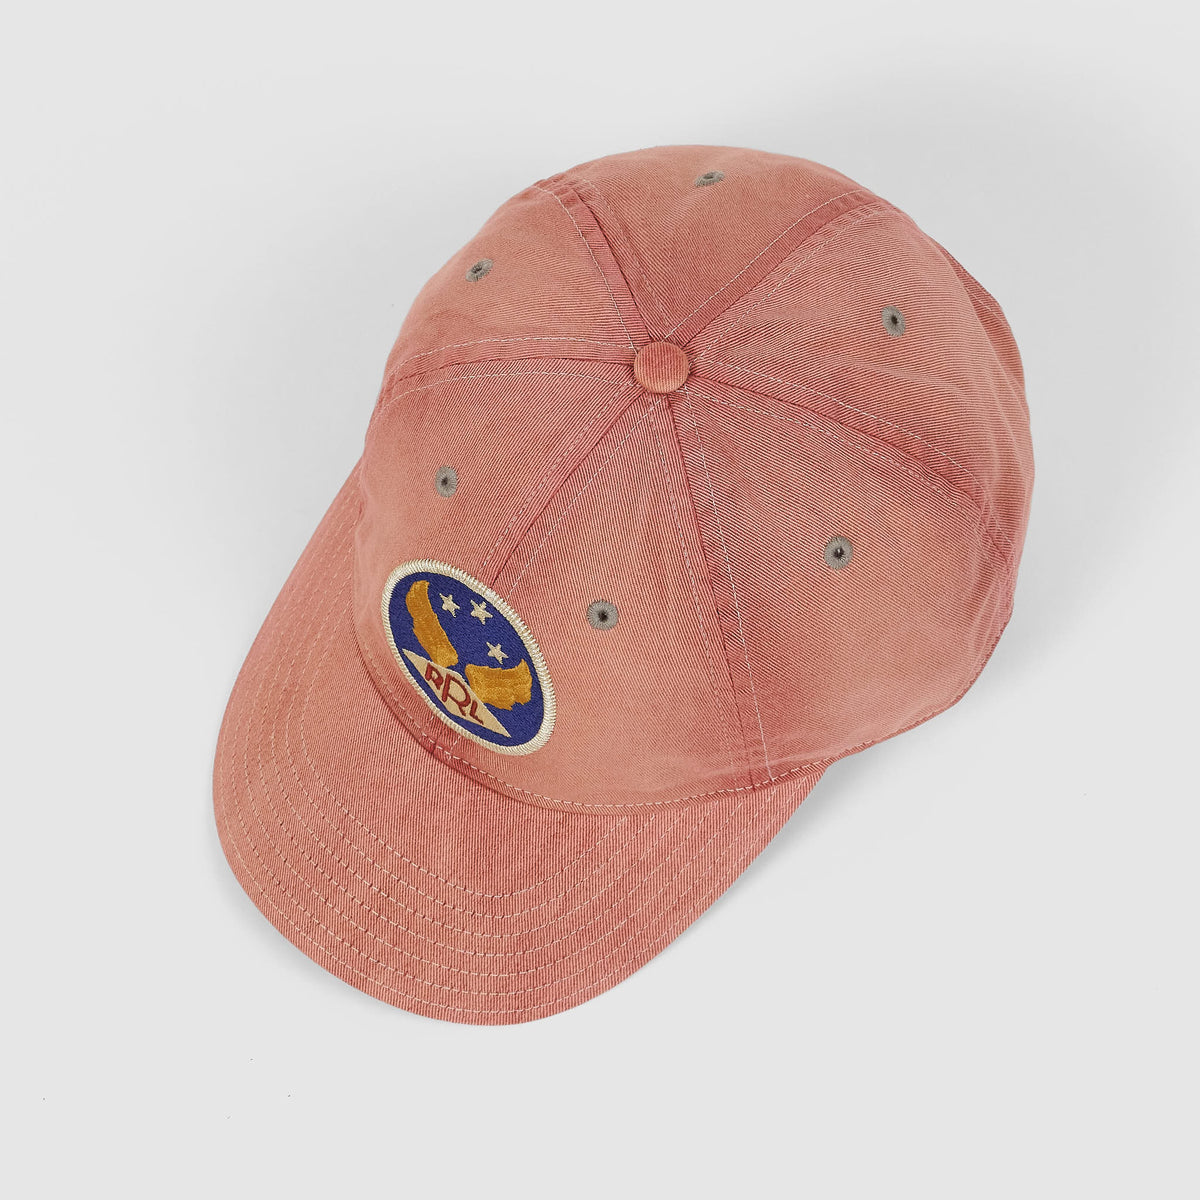 Double RL Garment Dyed Ball Cap